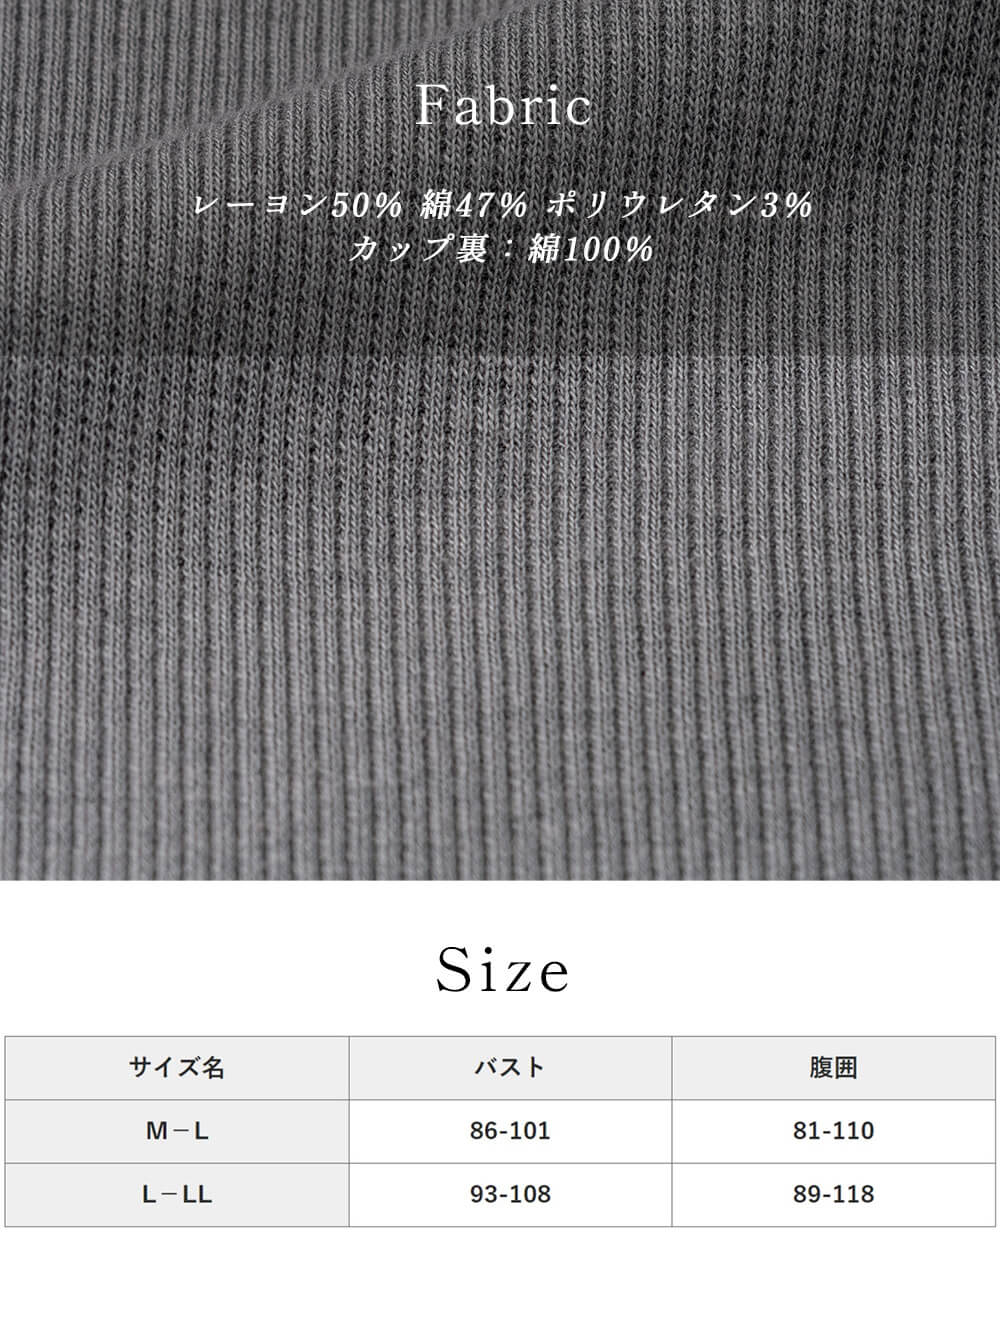 Fabric&size